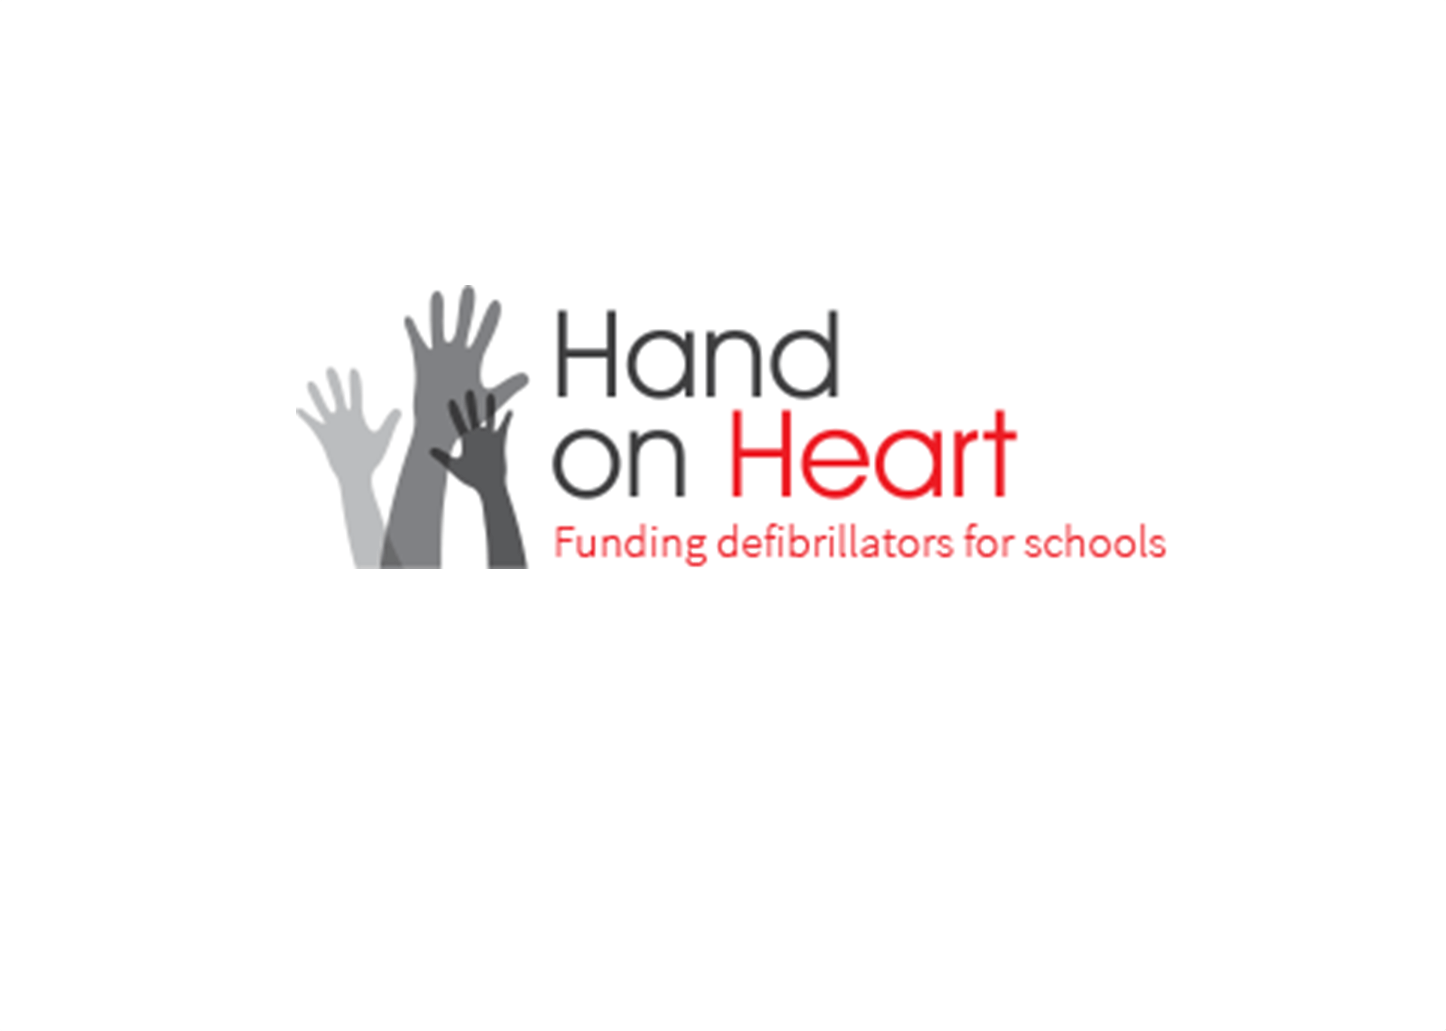 Hand and Heart Logo - Hand on Heart logo - Ysgol Rhosnesni